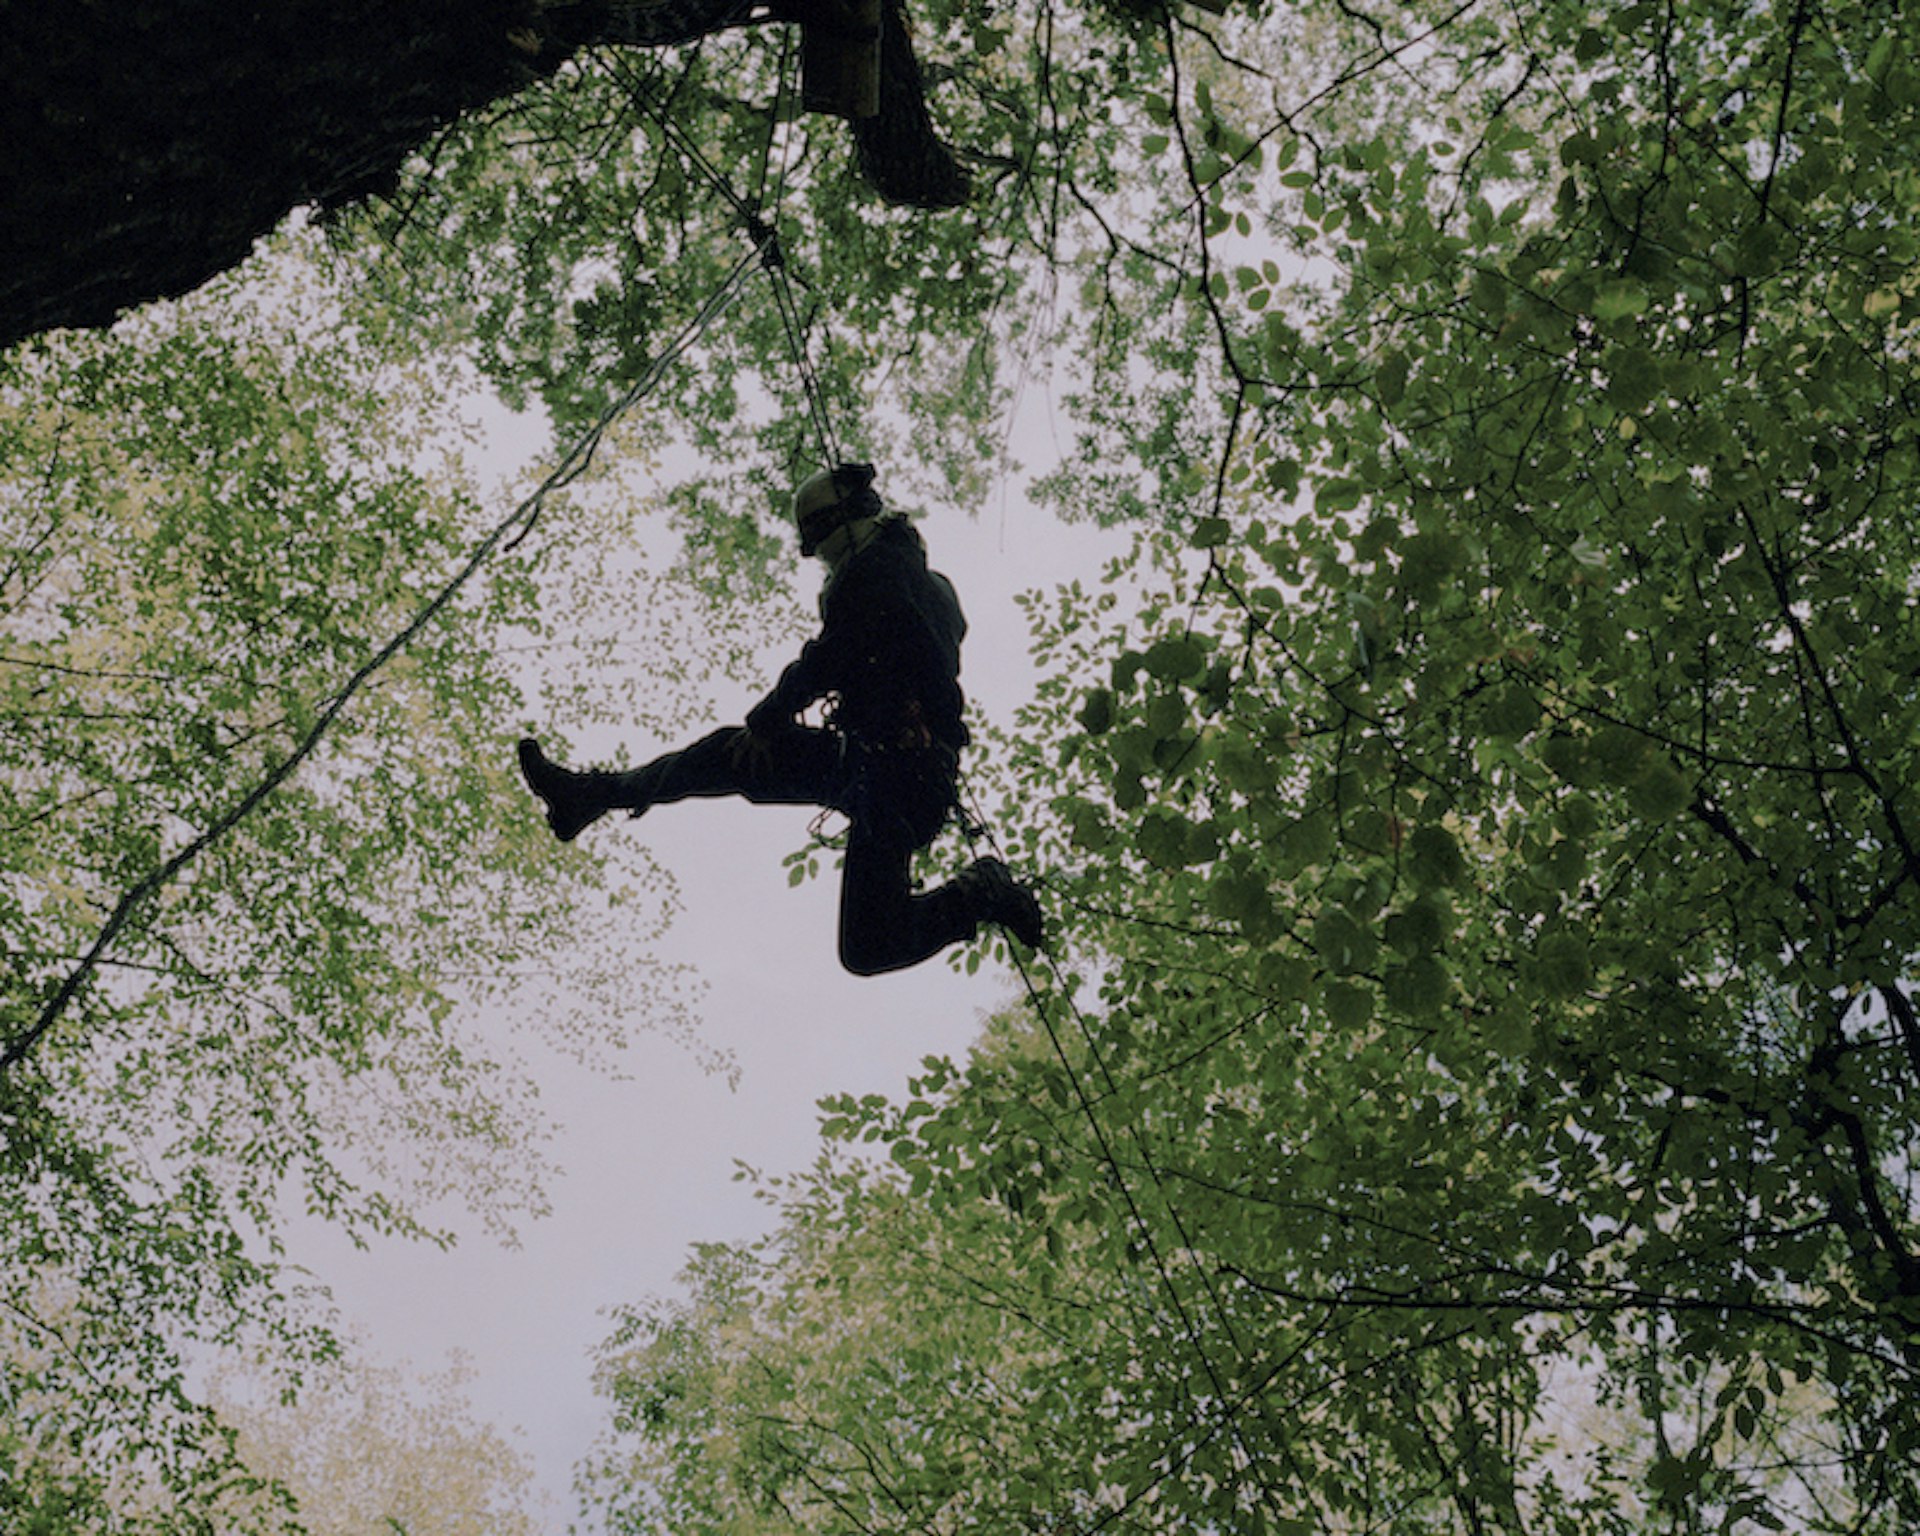 An activist on a zipline between trees